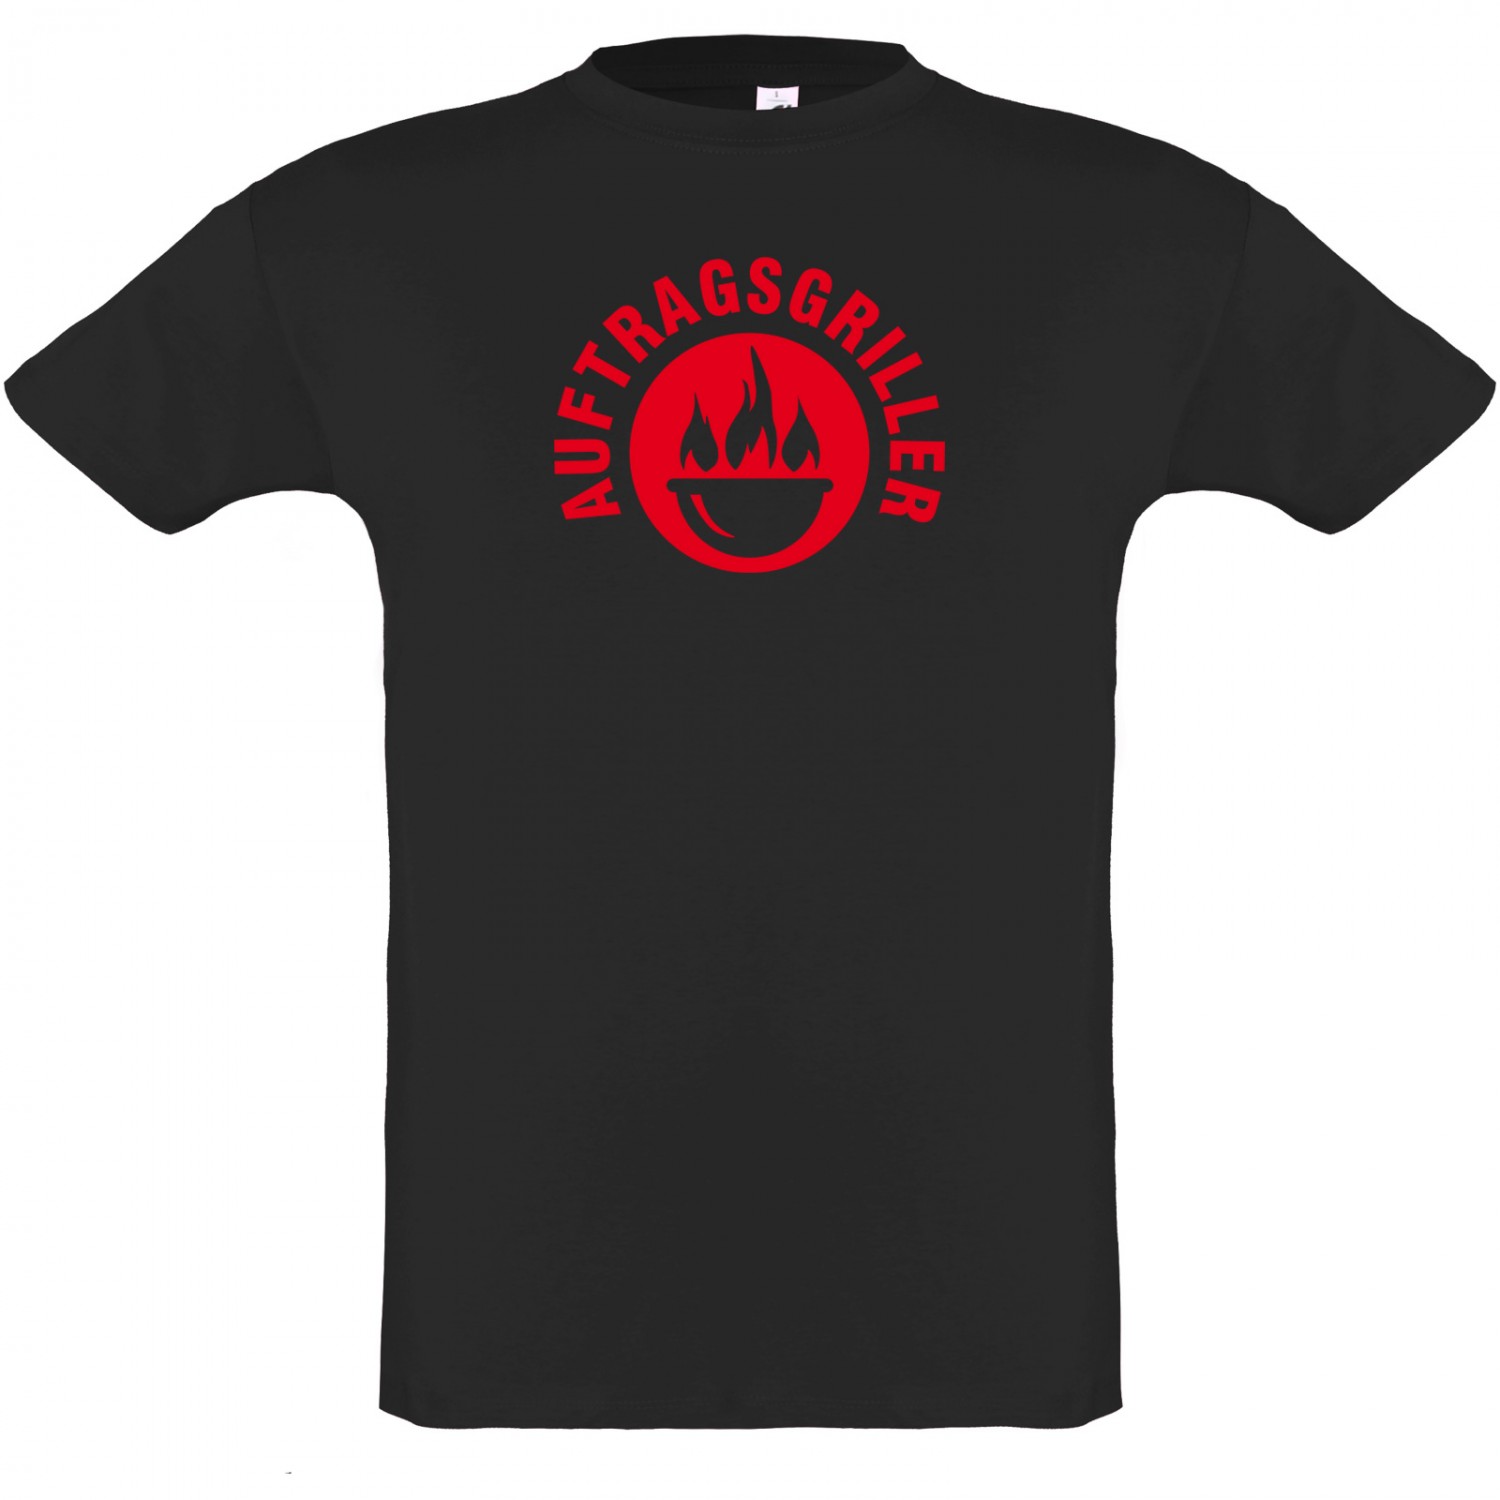 Auftragsgriller T-Shirt BBQ Grillen Shirt schwarz (Größe: XL)